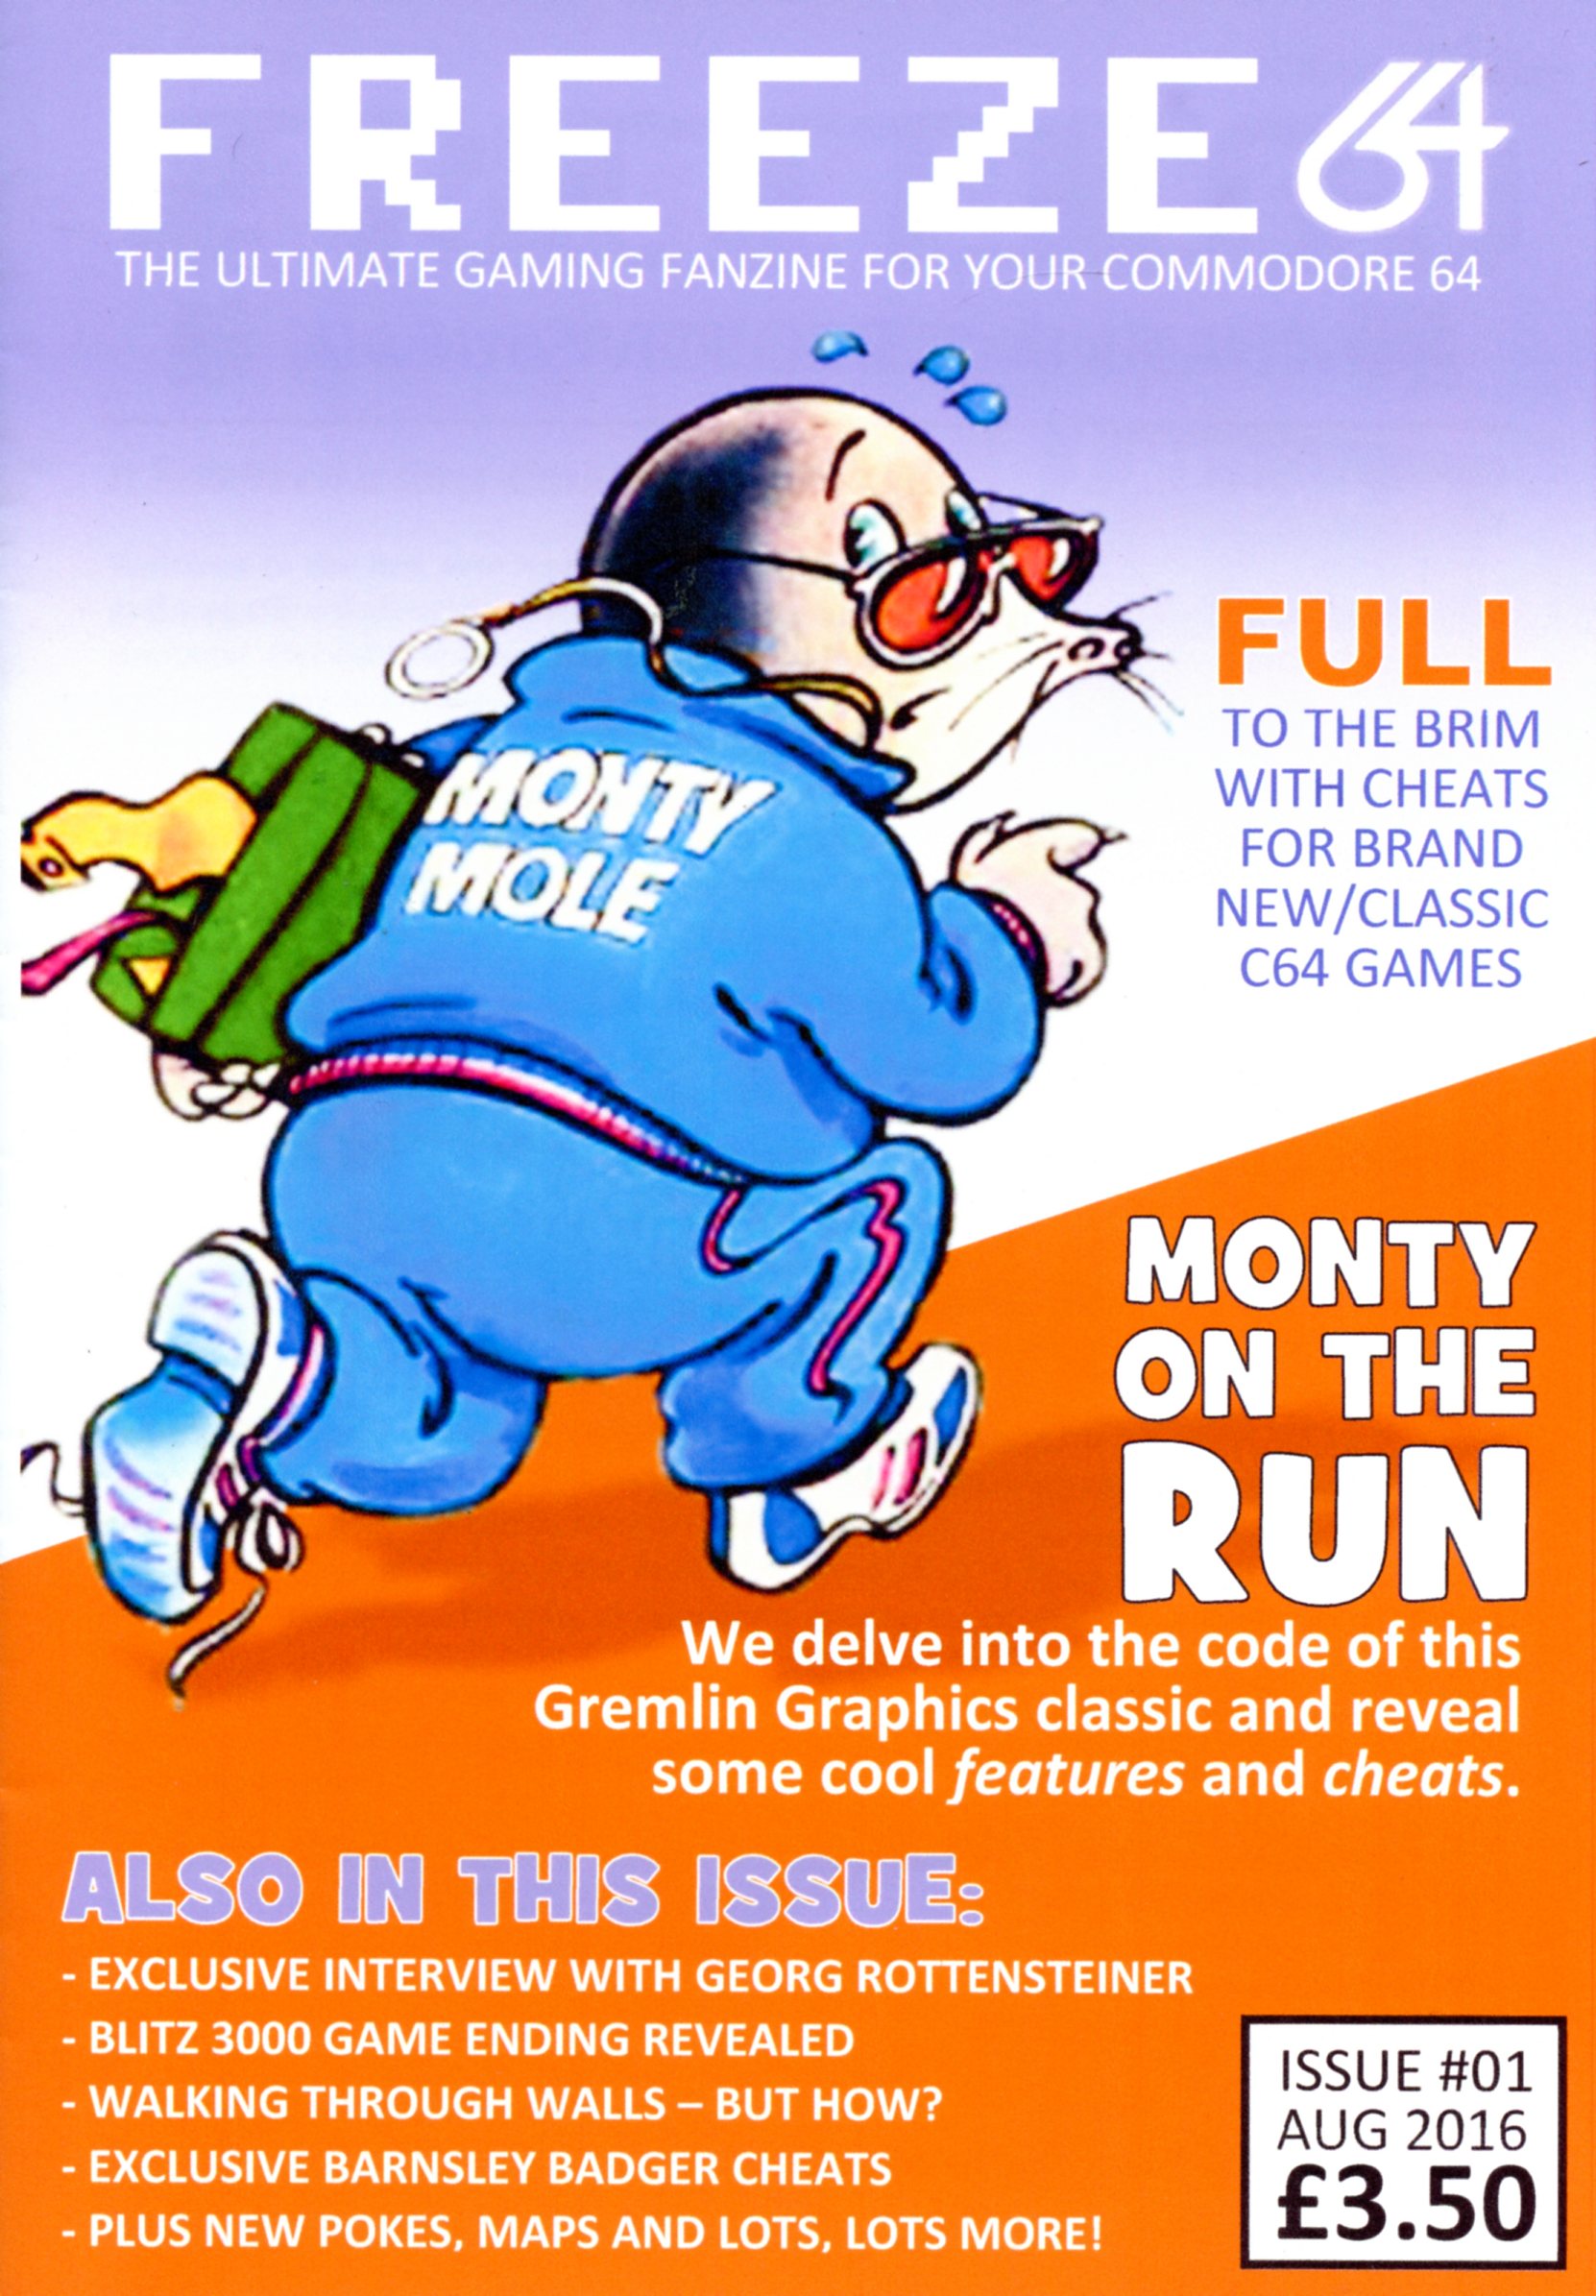 Freeze64 Fanzine (@C64_endings) – Issue 1